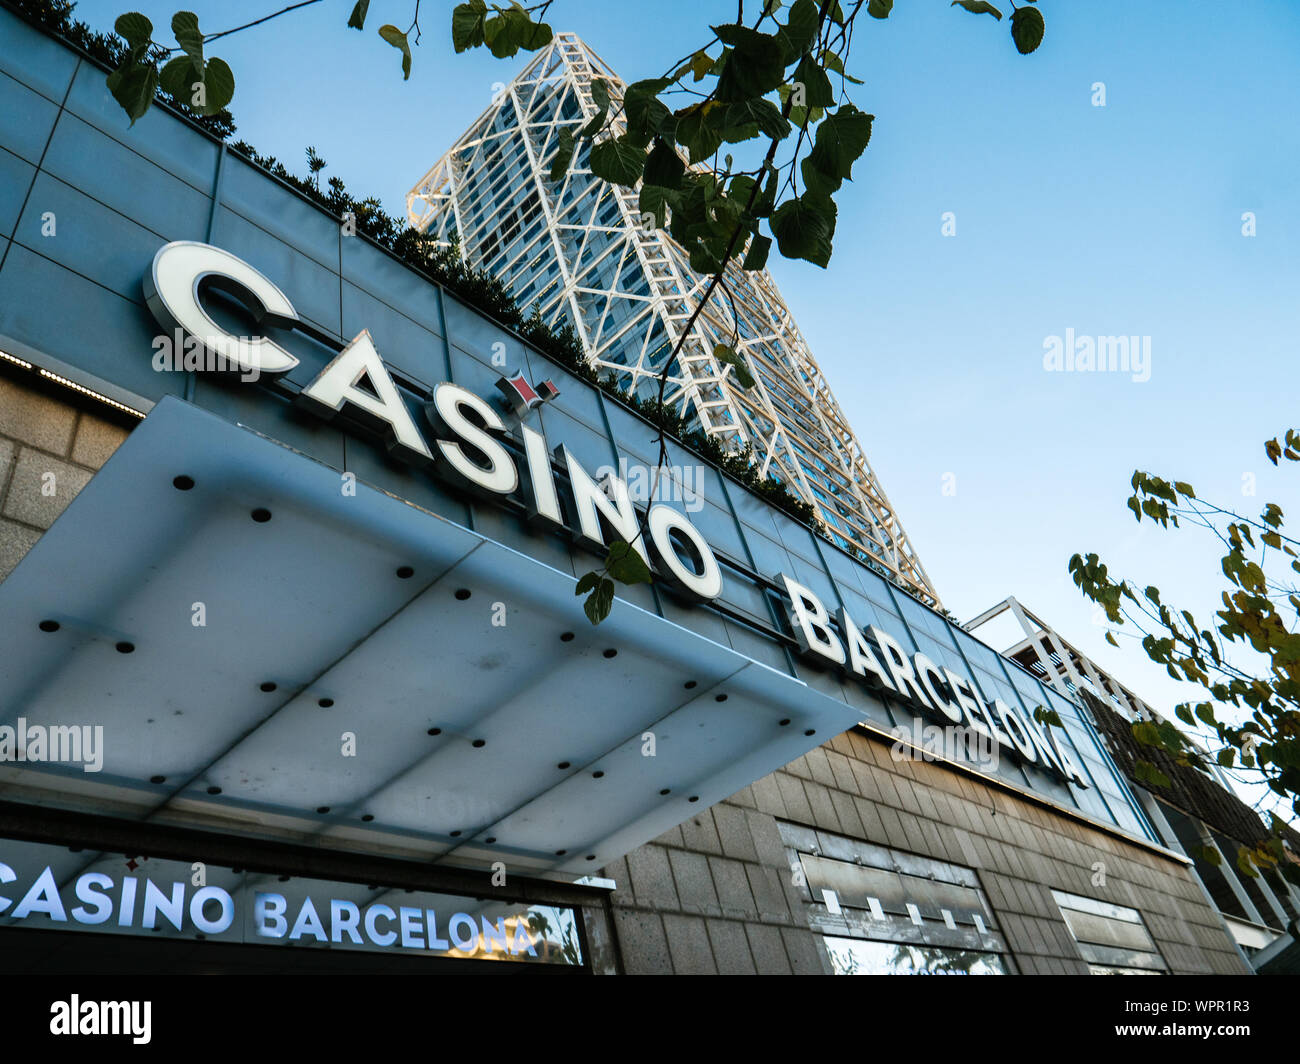 Barcelona, Spain - Nov 15, 2017: Casino Barcelona logotype above the entrance of the gambling place near the Barceloneta beach Stock Photo